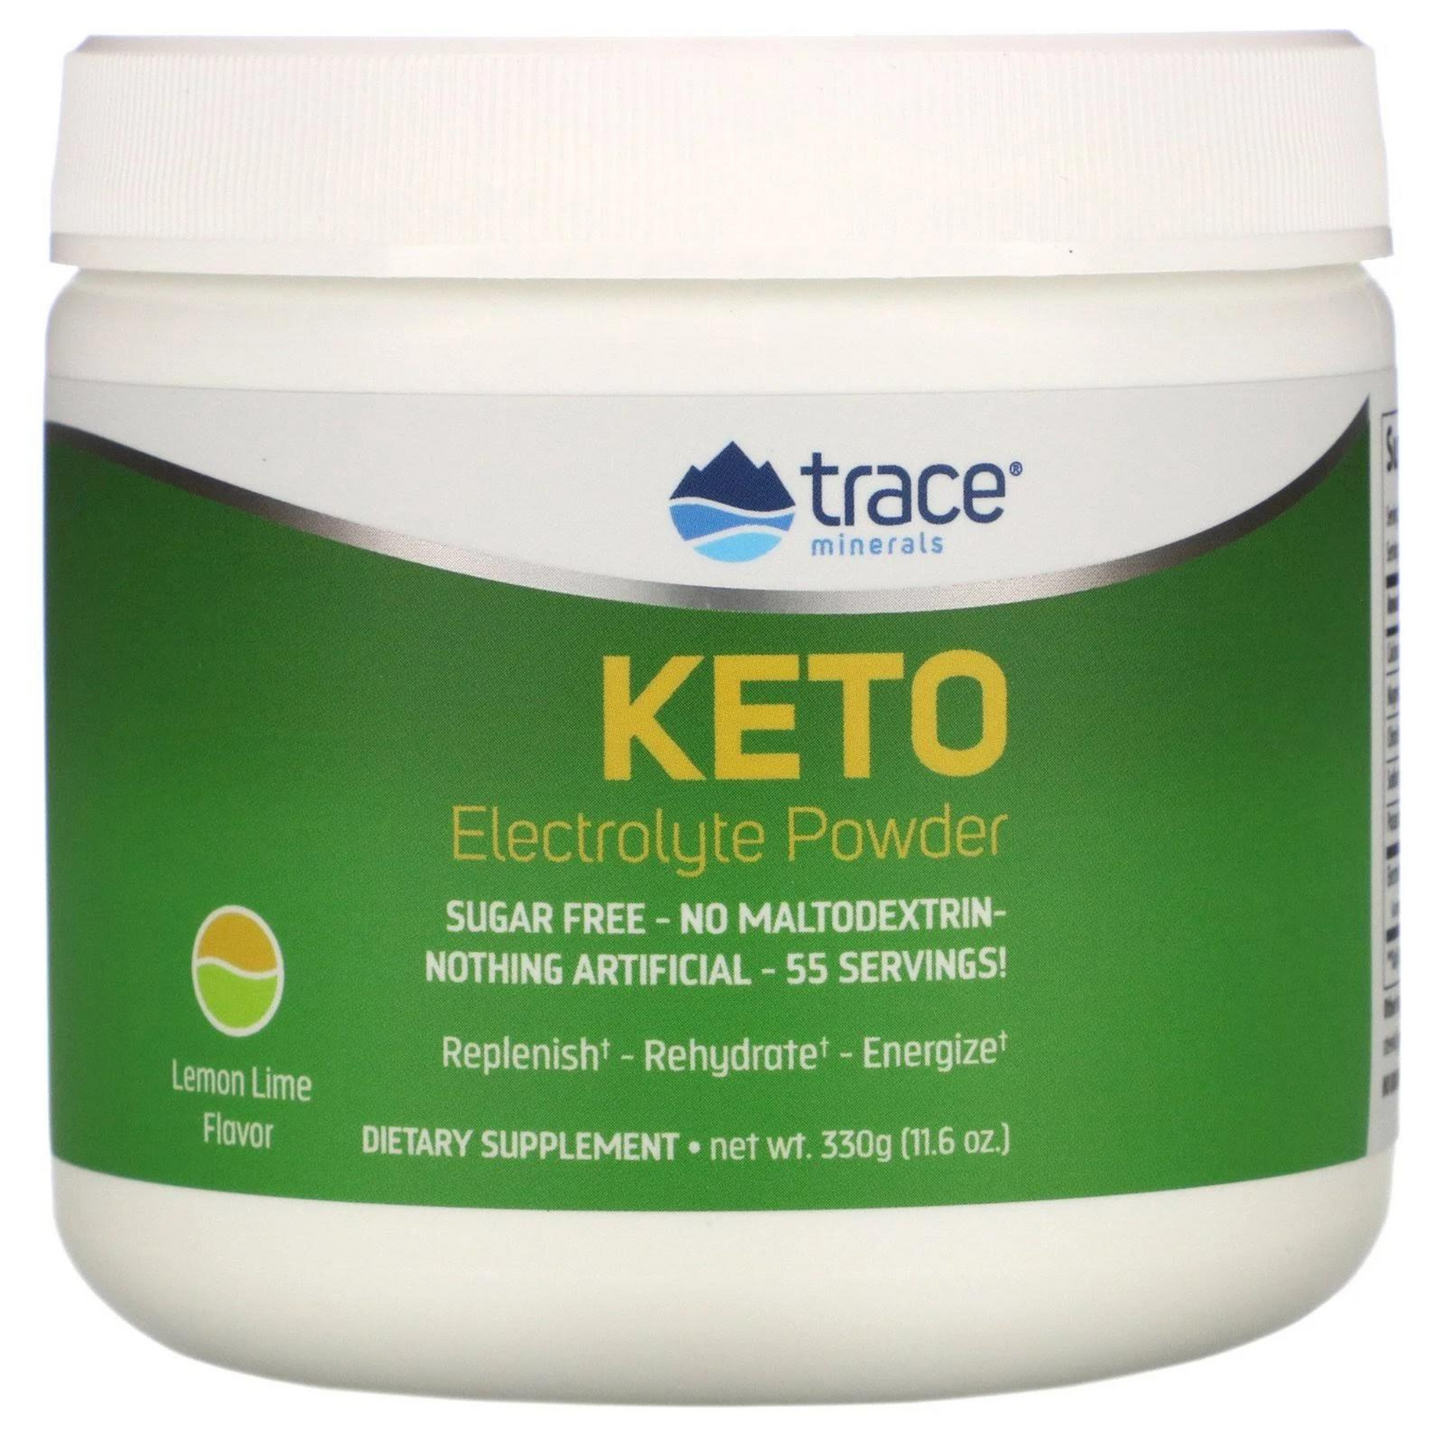 Primary Image of Keto Electrolyte Powder